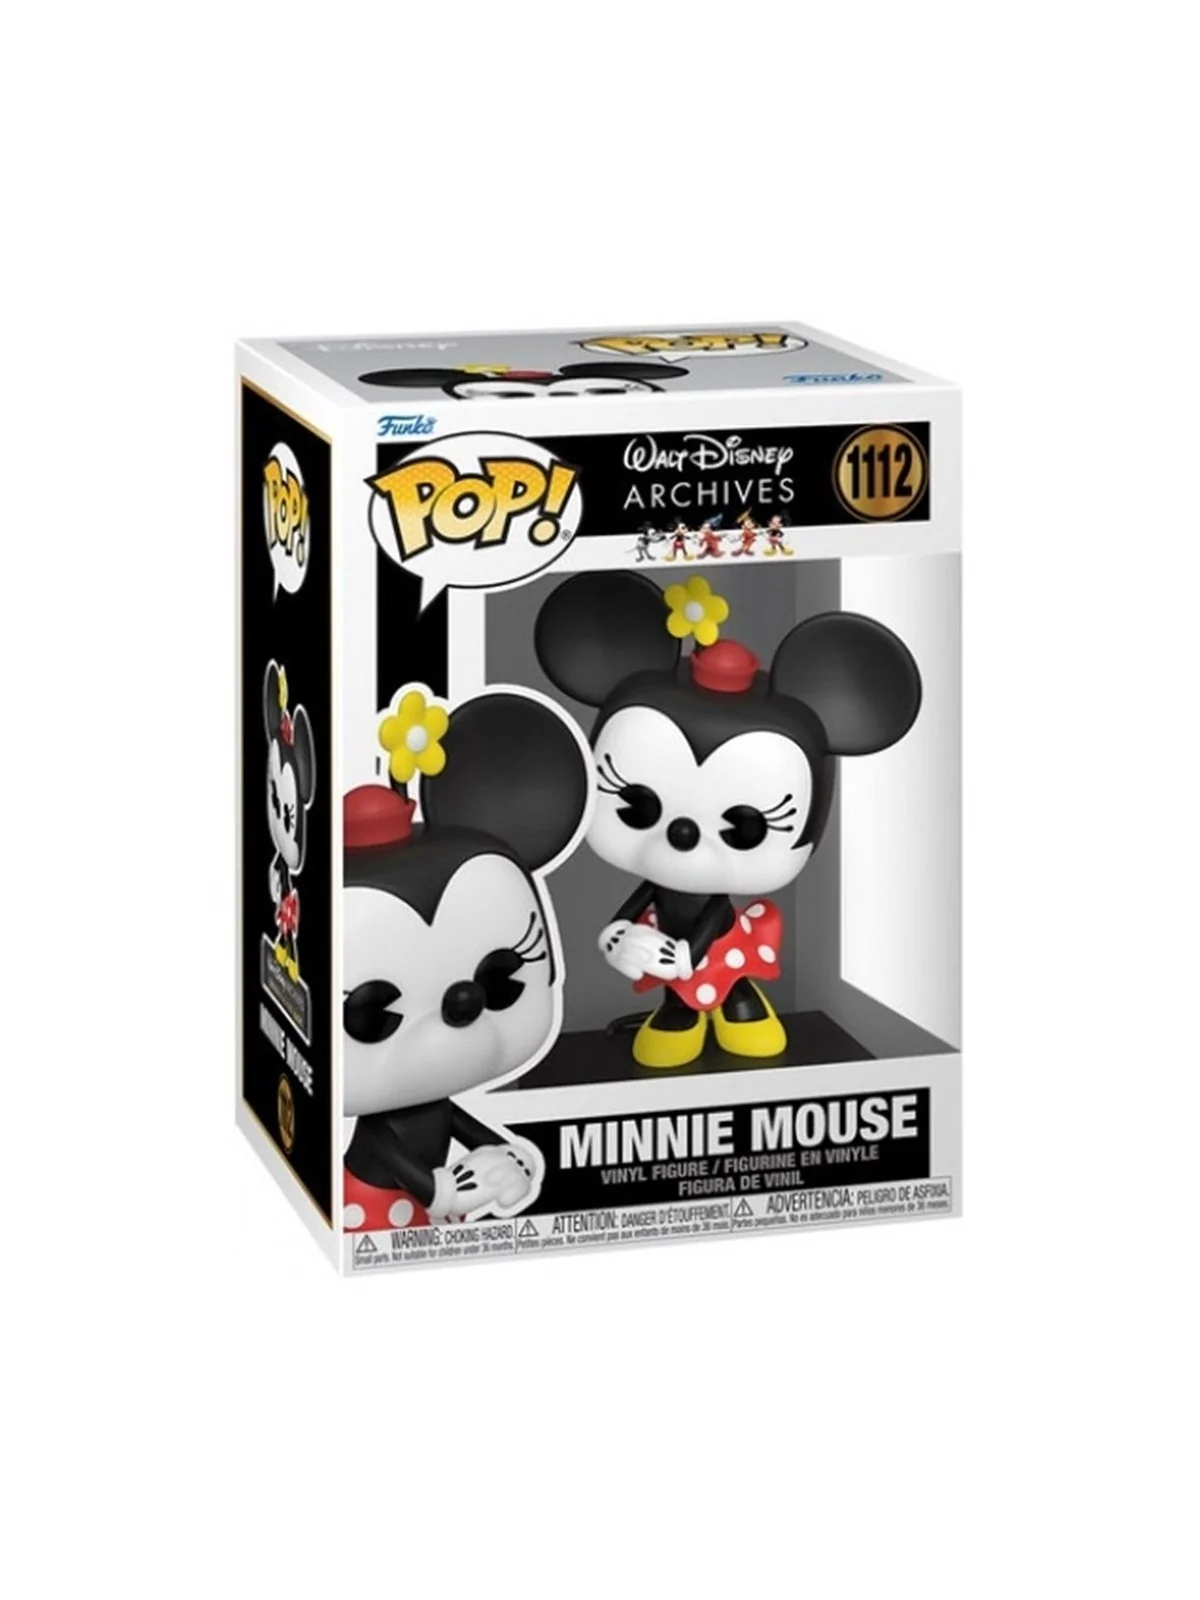 Comprar Funko Pop Disney Minnie Mouse Edicion 2013 (1112) barato al me